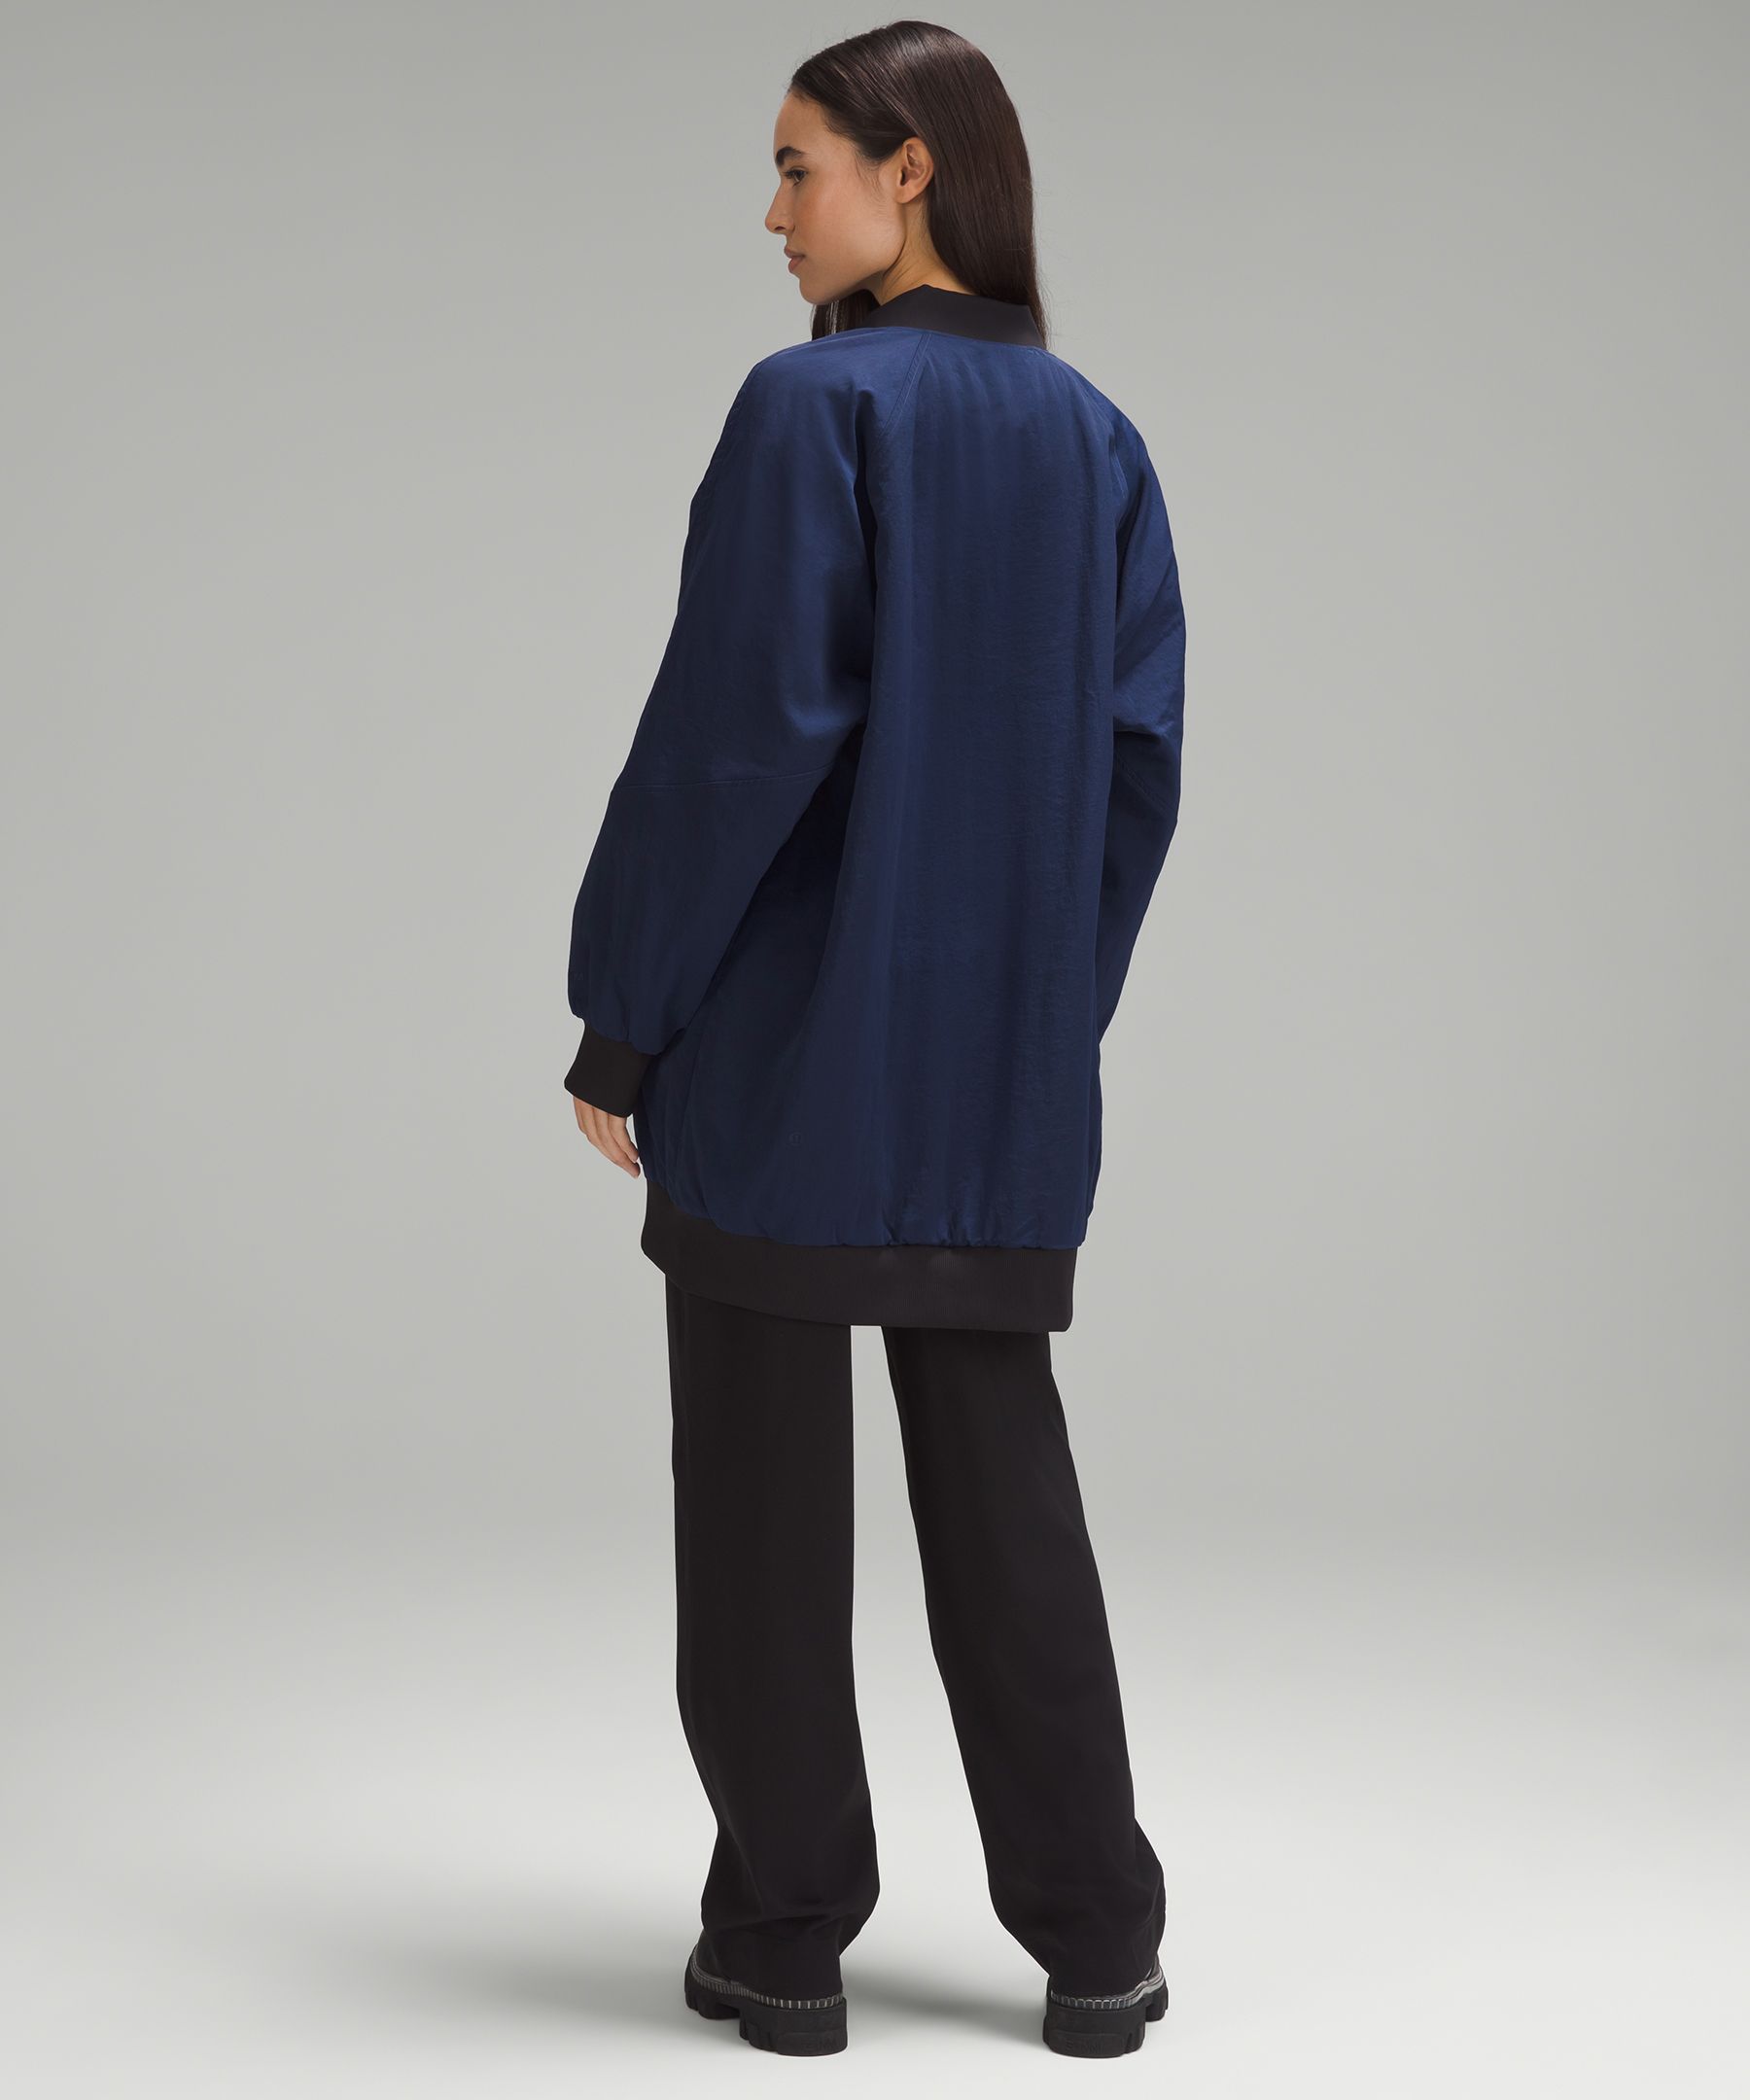 Lululemon InStill Jacket Blue Size 2 - $65 (45% Off Retail) - From Jordan